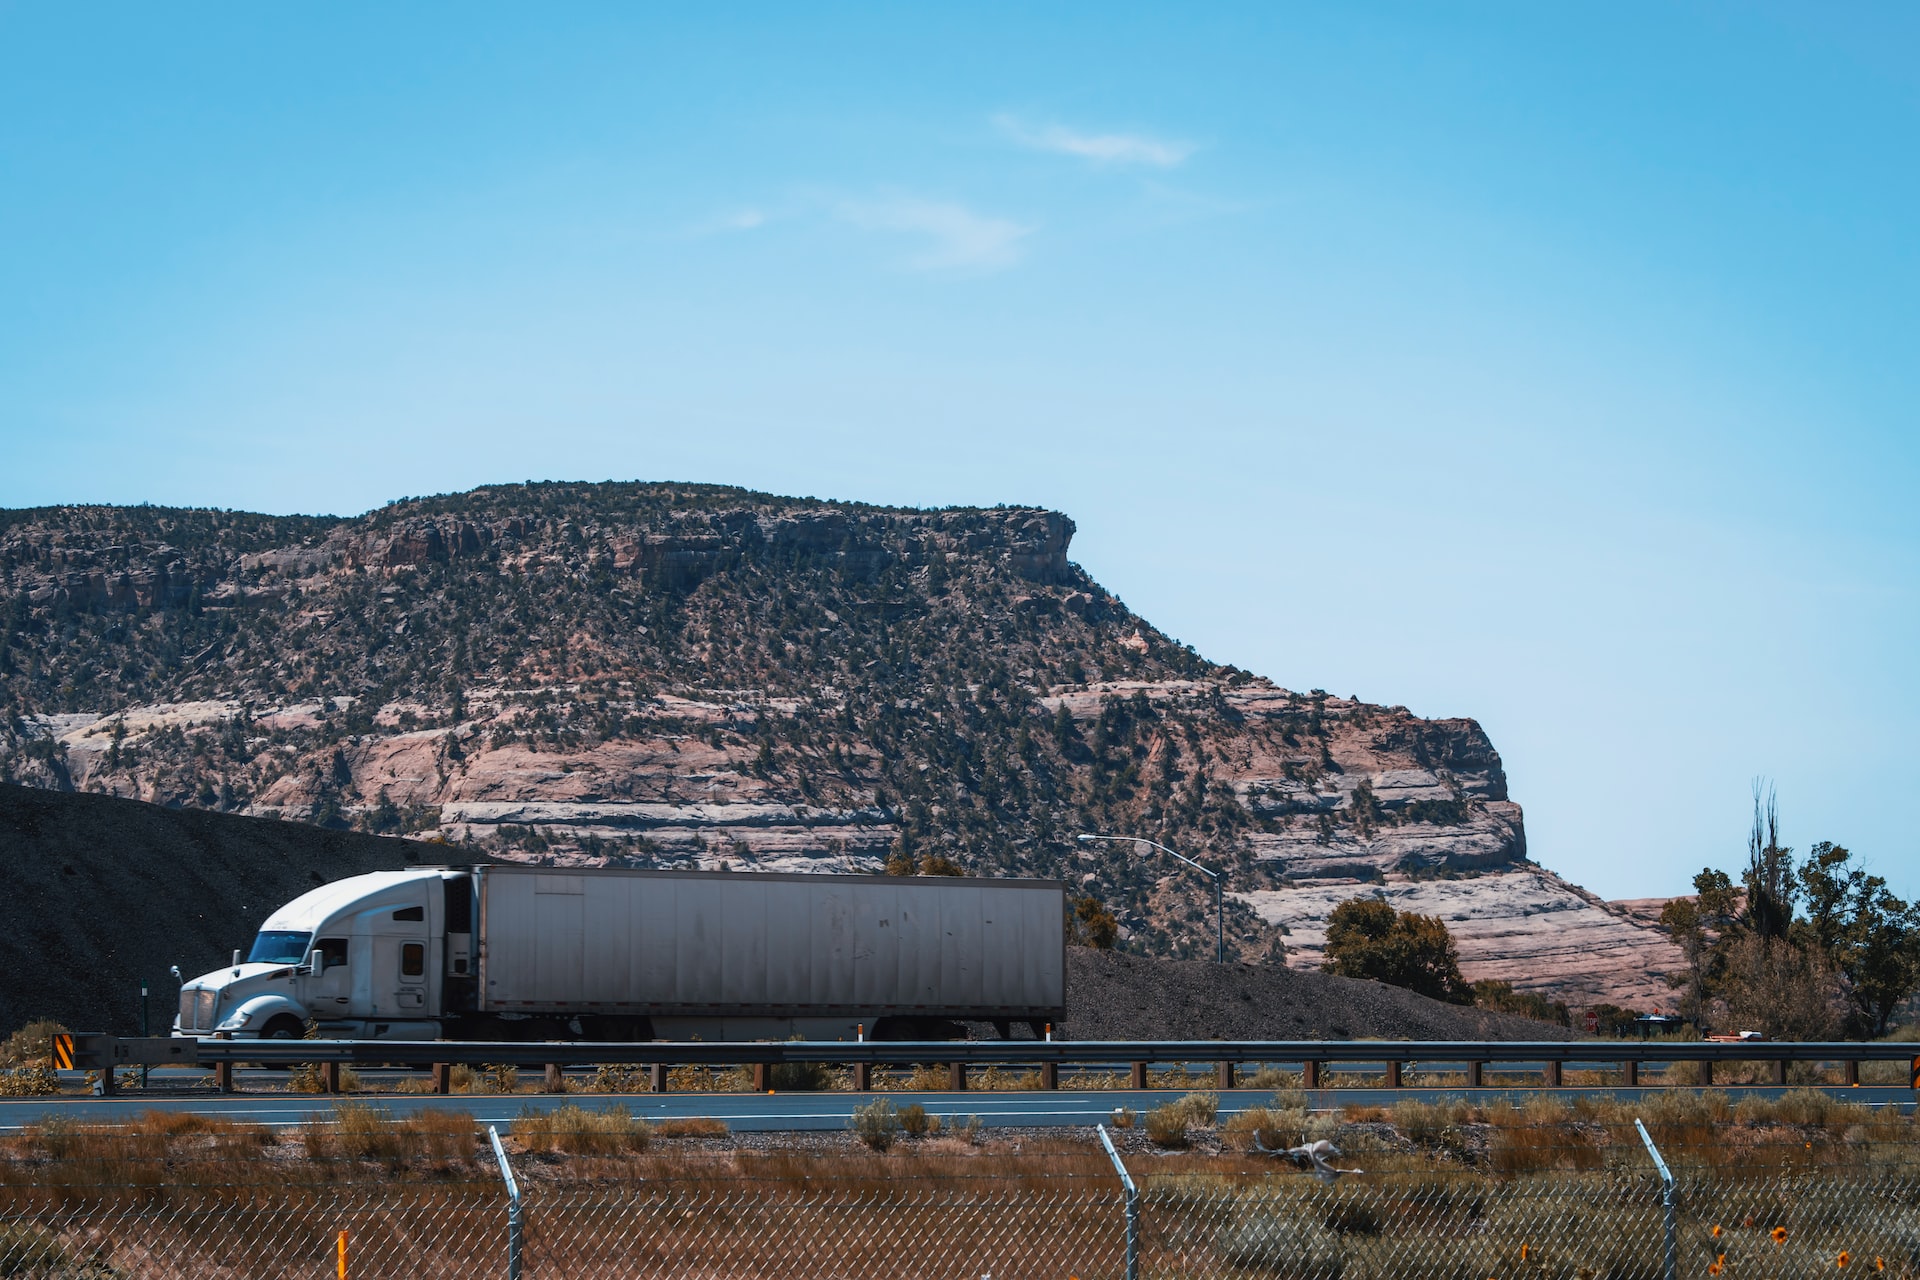 Truck driving in the desert, illustrating the data-driven journey case study